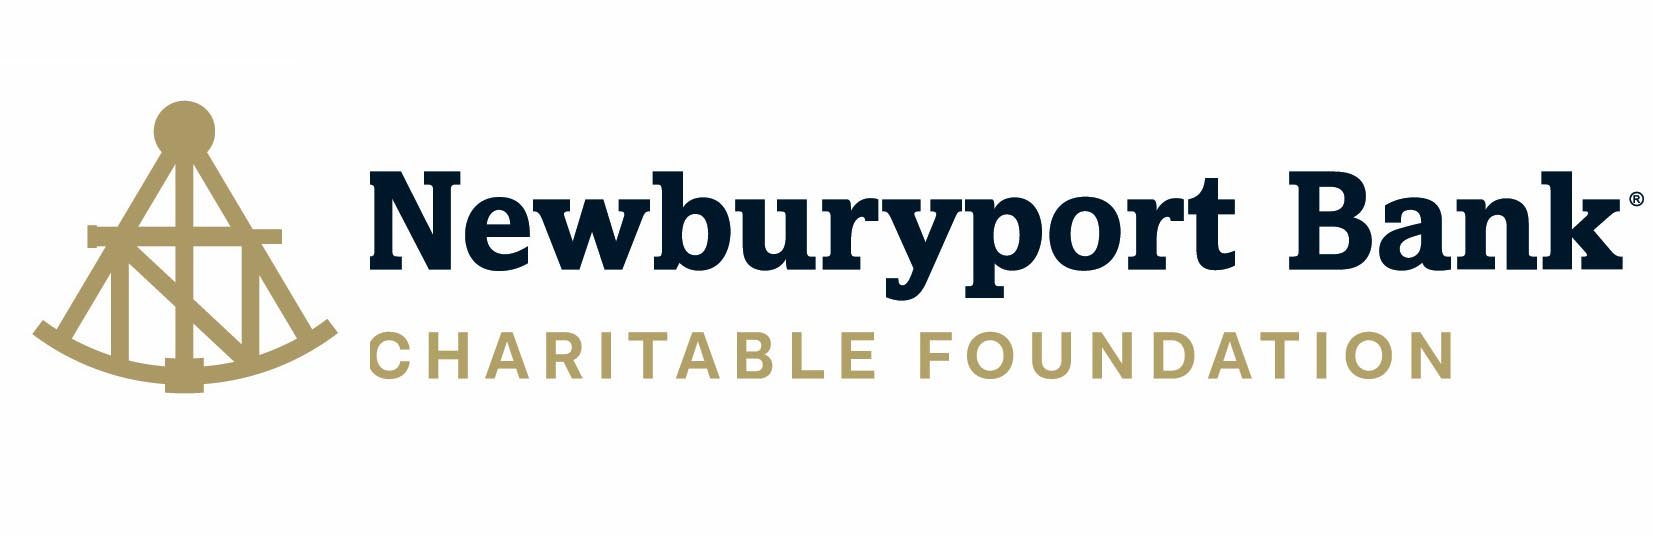 logo GG_Newburyport Bank Charitable Foundation.jpg